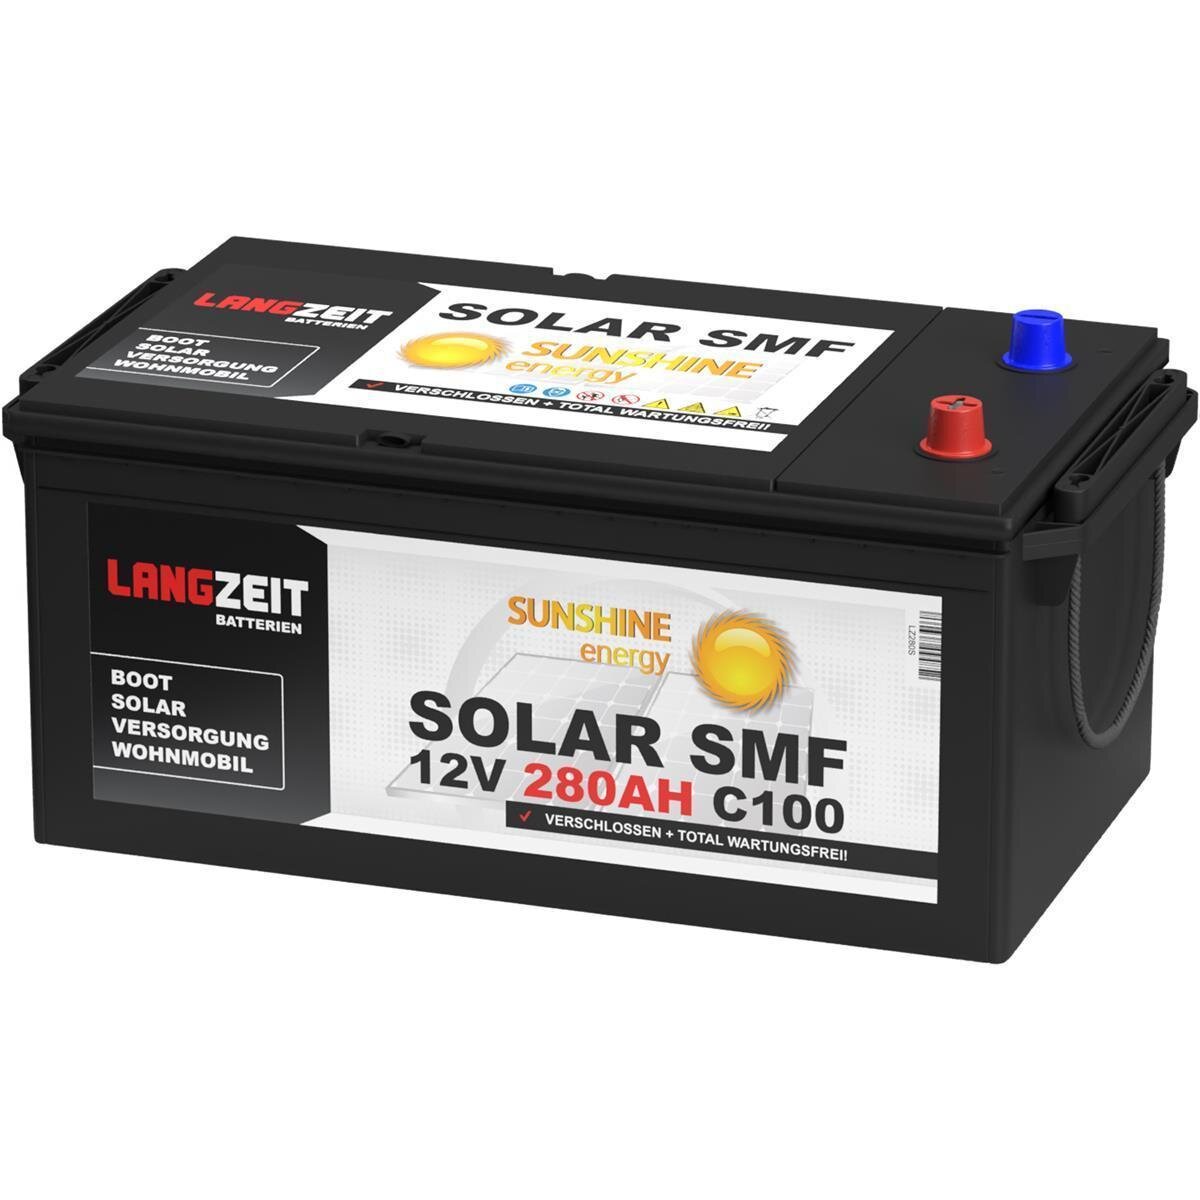 https://www.winnerbatterien.de/media/image/product/8588/lg/langzeit-solarbatterie-smf-280ah-12v.jpg